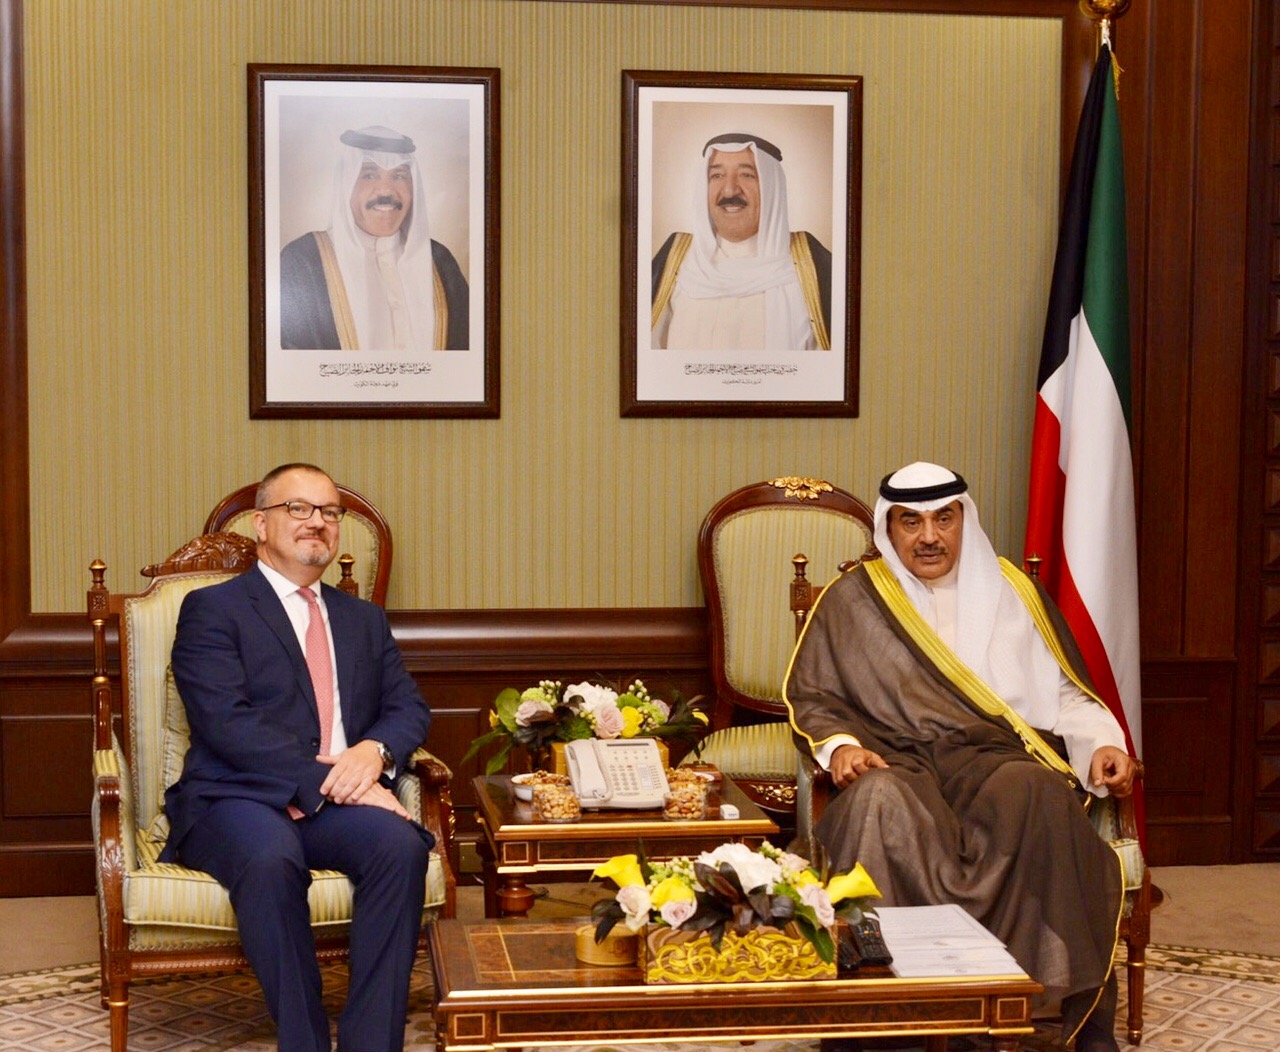 Acting Prime Minister and Foreign Minister Sheikh Sabah Khaled Al-Hamad Al-Sabah received UK's outgoing Ambassador to Kuwait Mathew Lodge